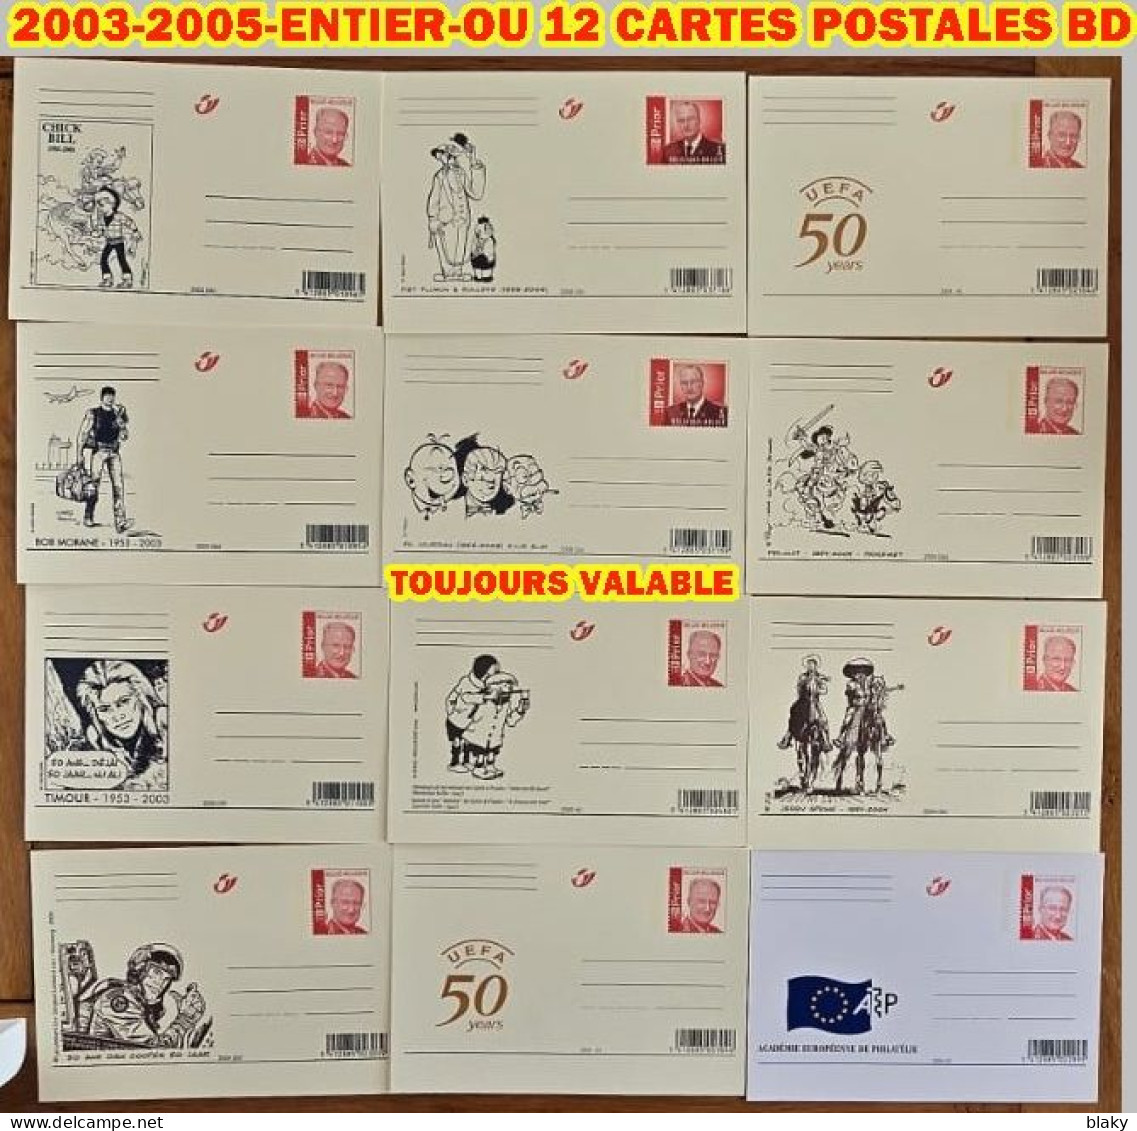 2003-2005-ENTIER-OU 12 CARTES POSTALES BD * IMPORTANT PRE TIMBREES - Tarjetas Ilustradas (1971-2014) [BK]